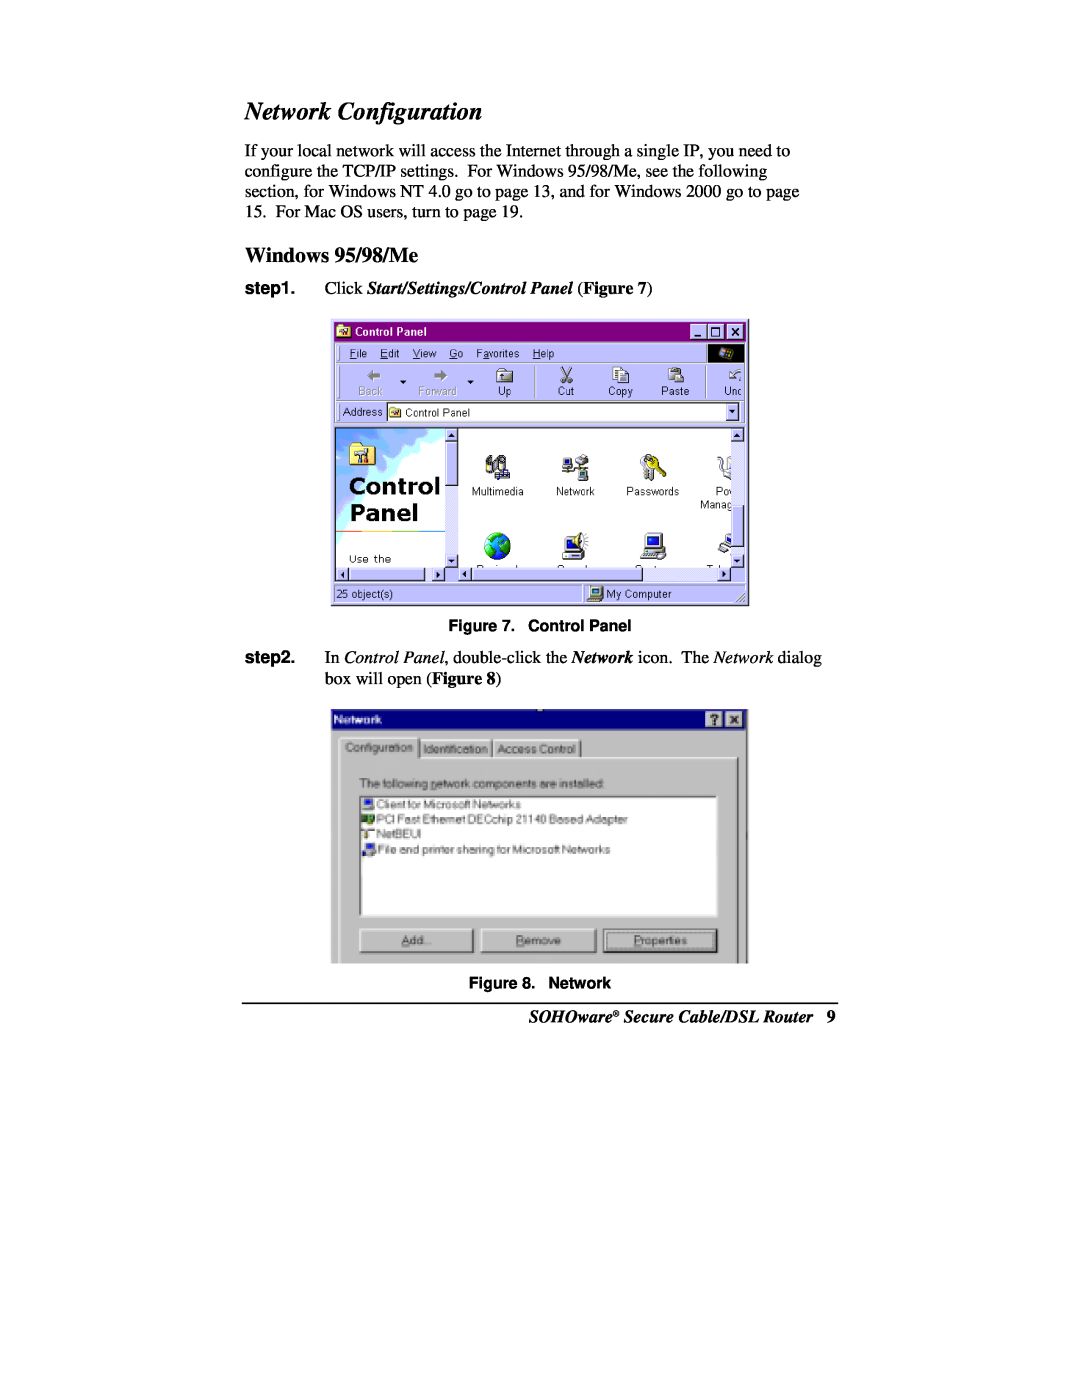 Soho NBG800 manual Network Configuration, Windows 95/98/Me, Click Start/Settings/Control Panel Figure 